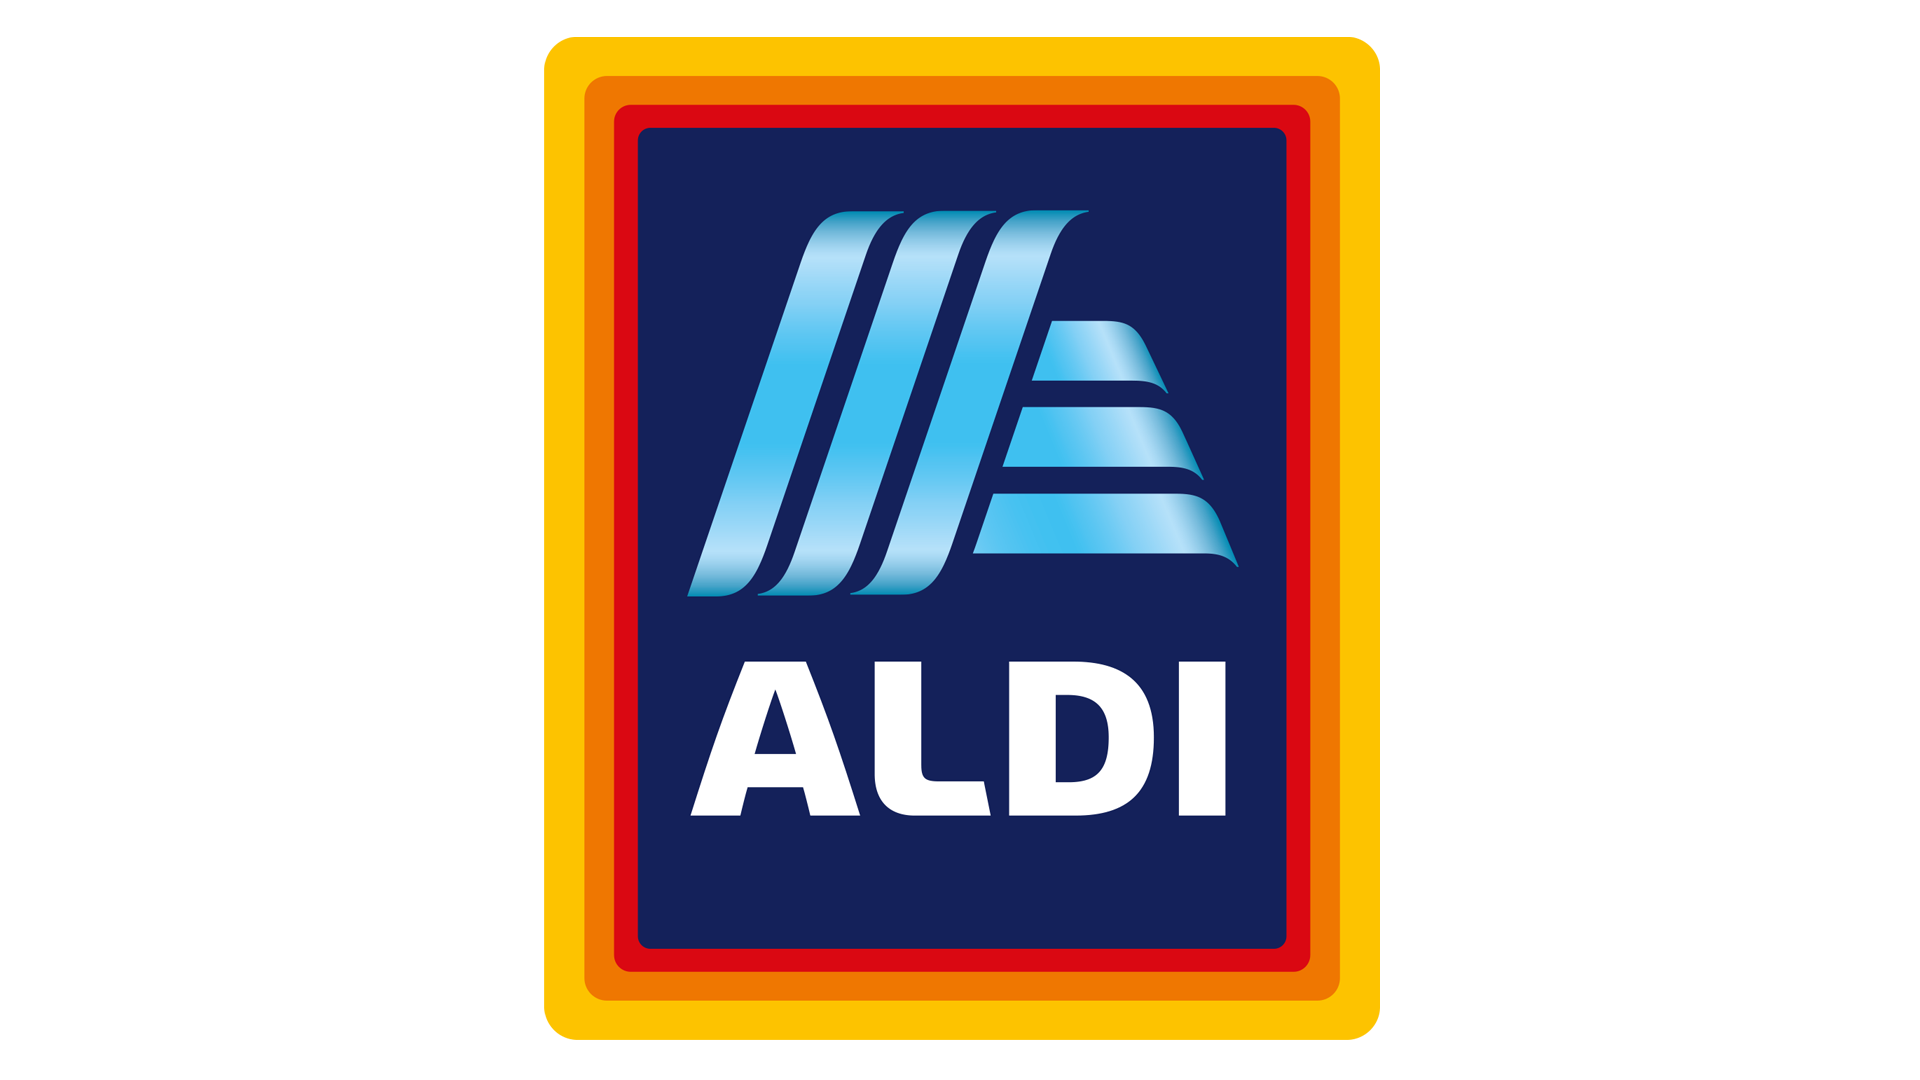 Aldi-logo.png